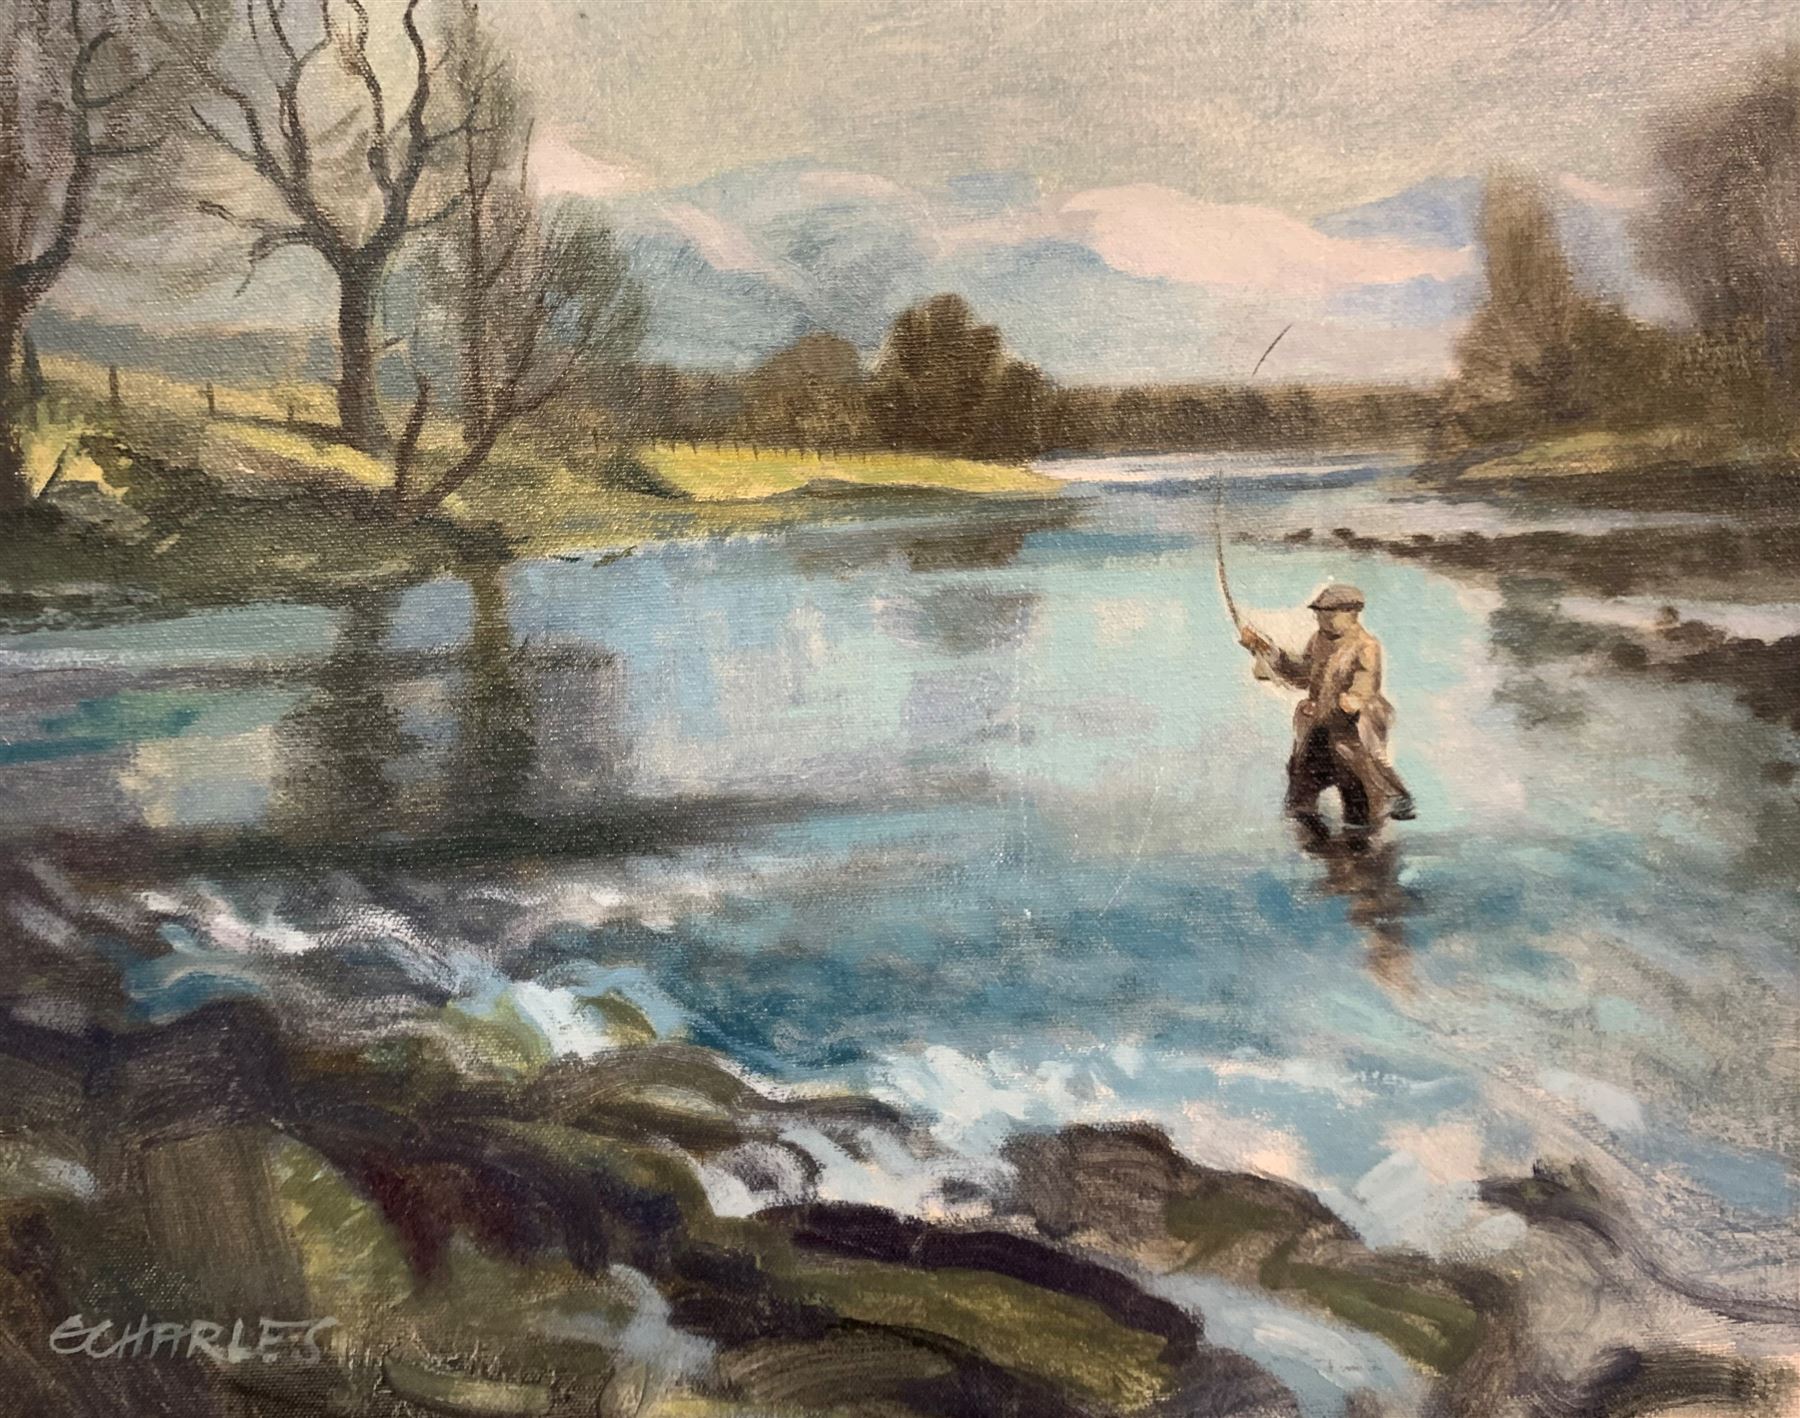 E Charles (British contemporary): Loch Fishing